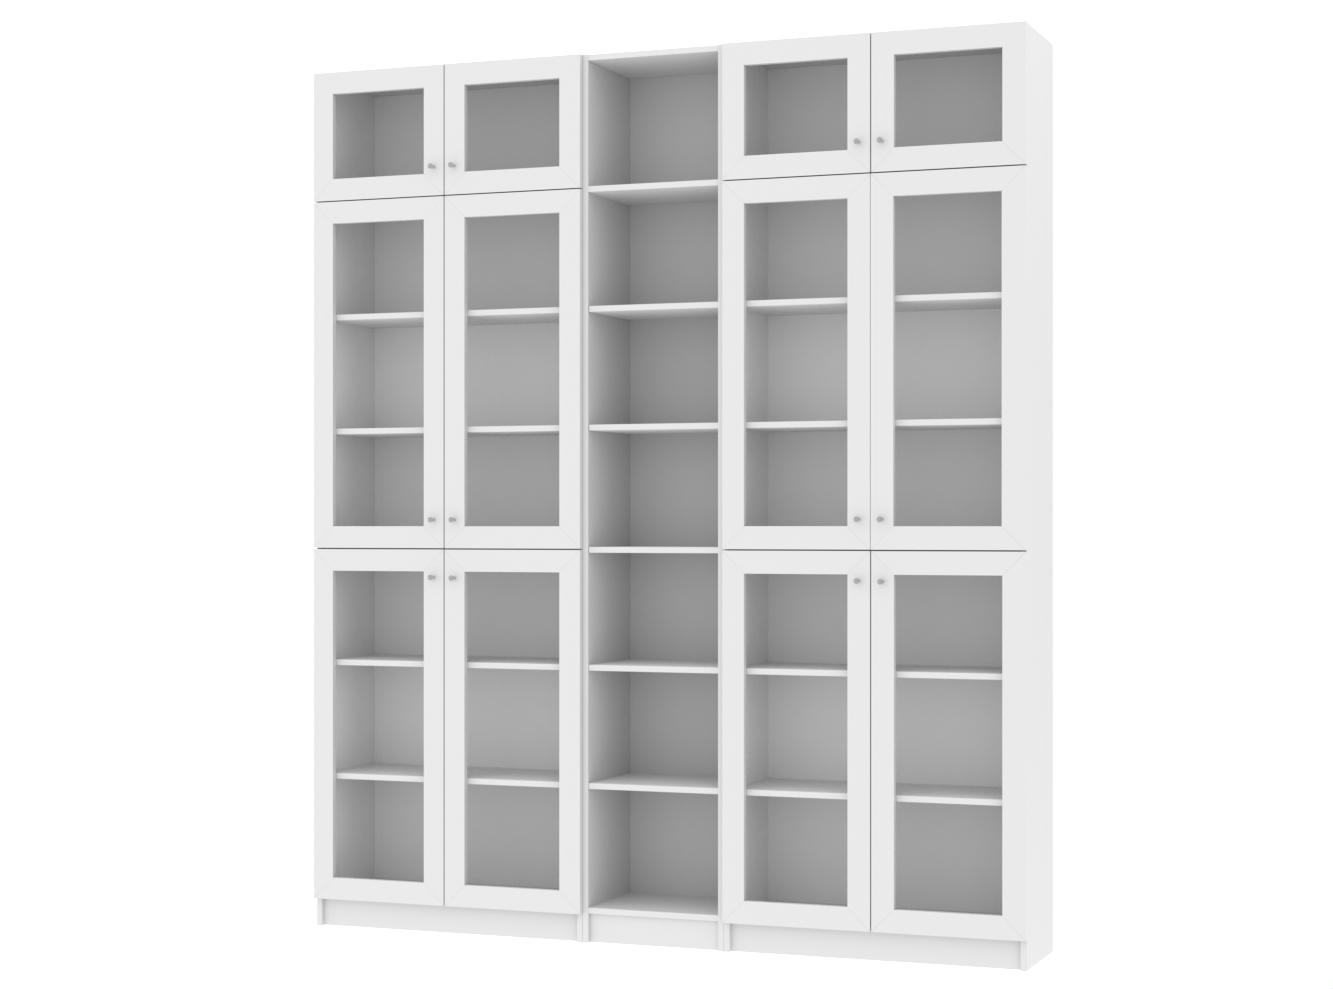  Книжный шкаф Билли 398 white ИКЕА (IKEA) изображение товара